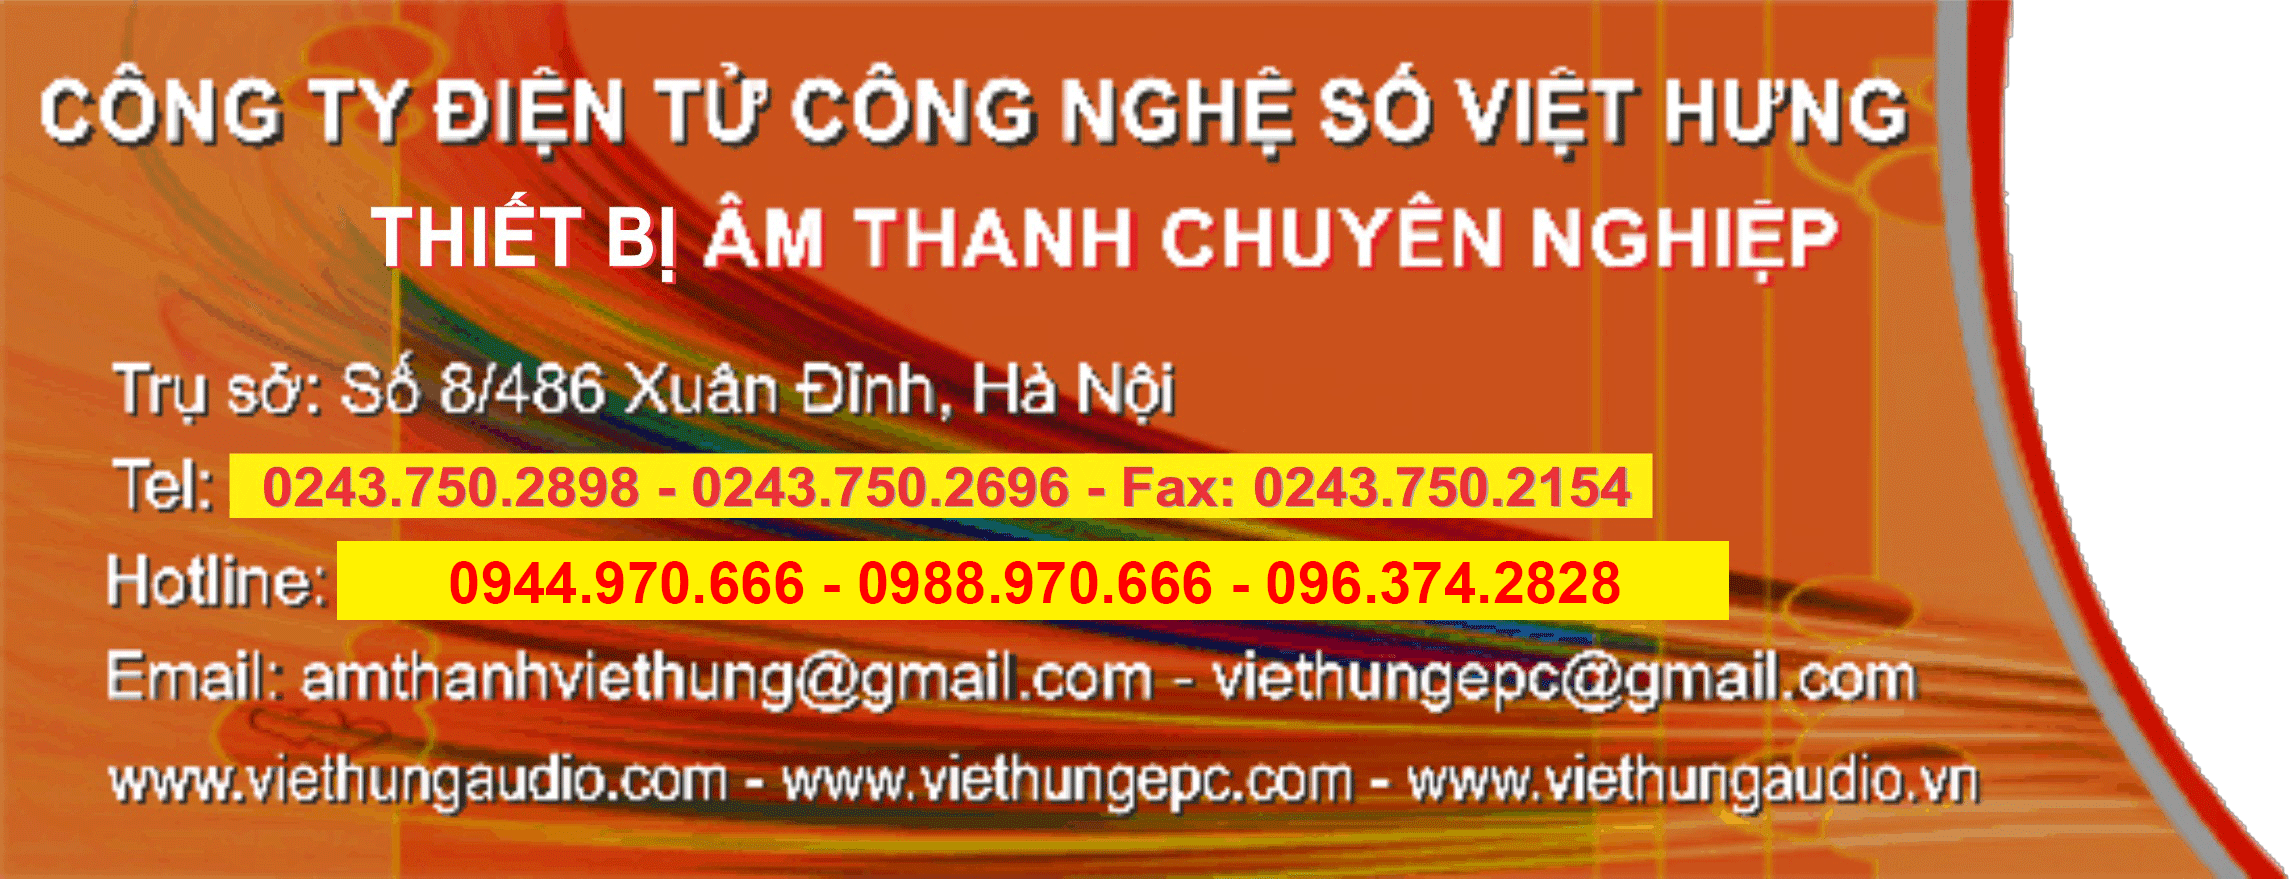 banner Việt Hưng Audio